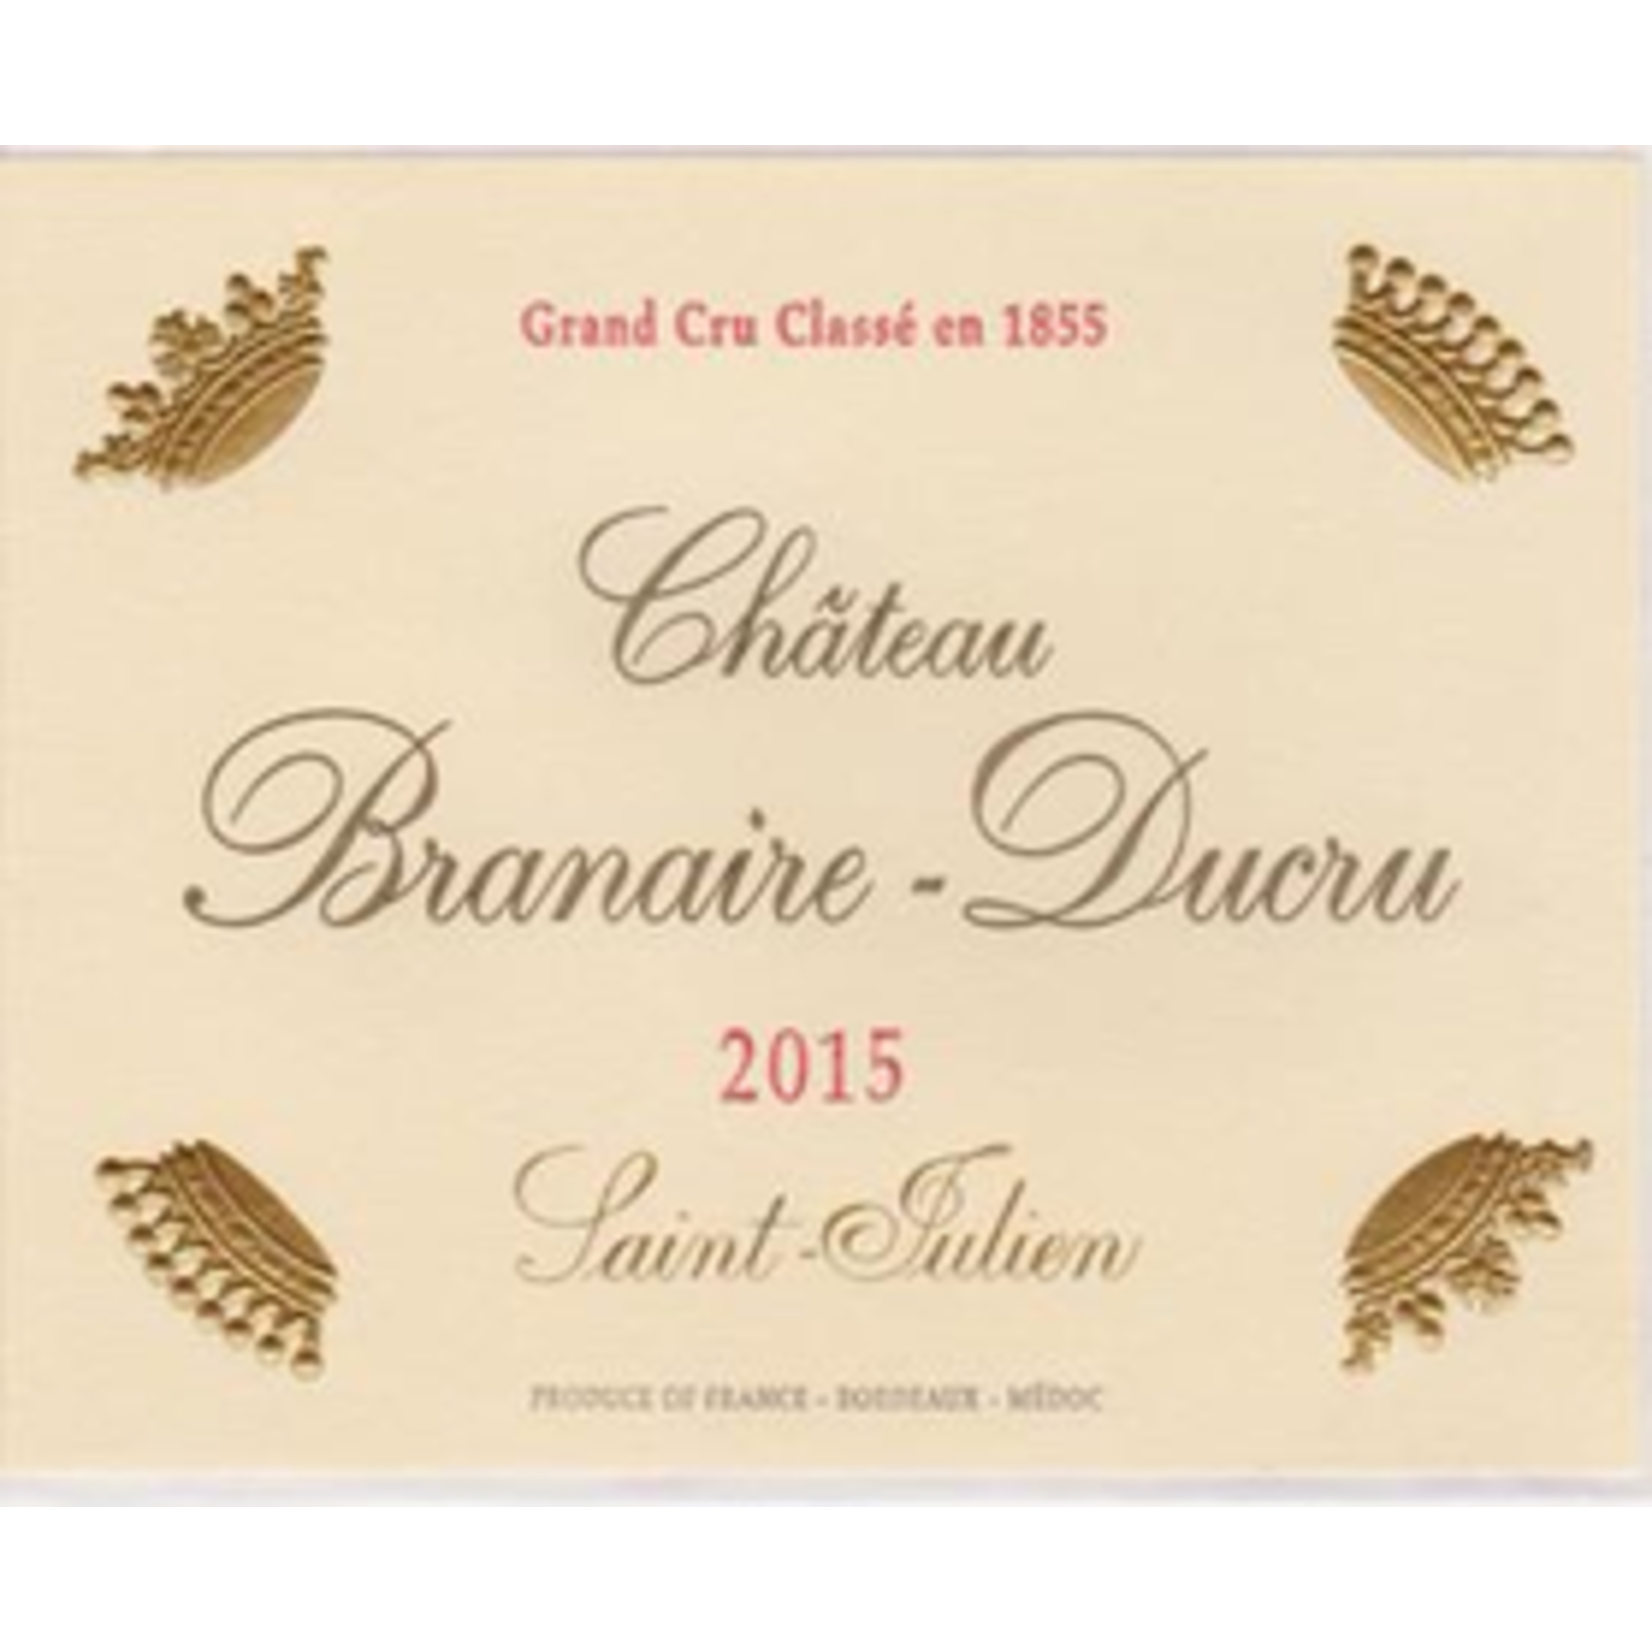 Wine Chateau Branaire Ducru Saint Julien 2015